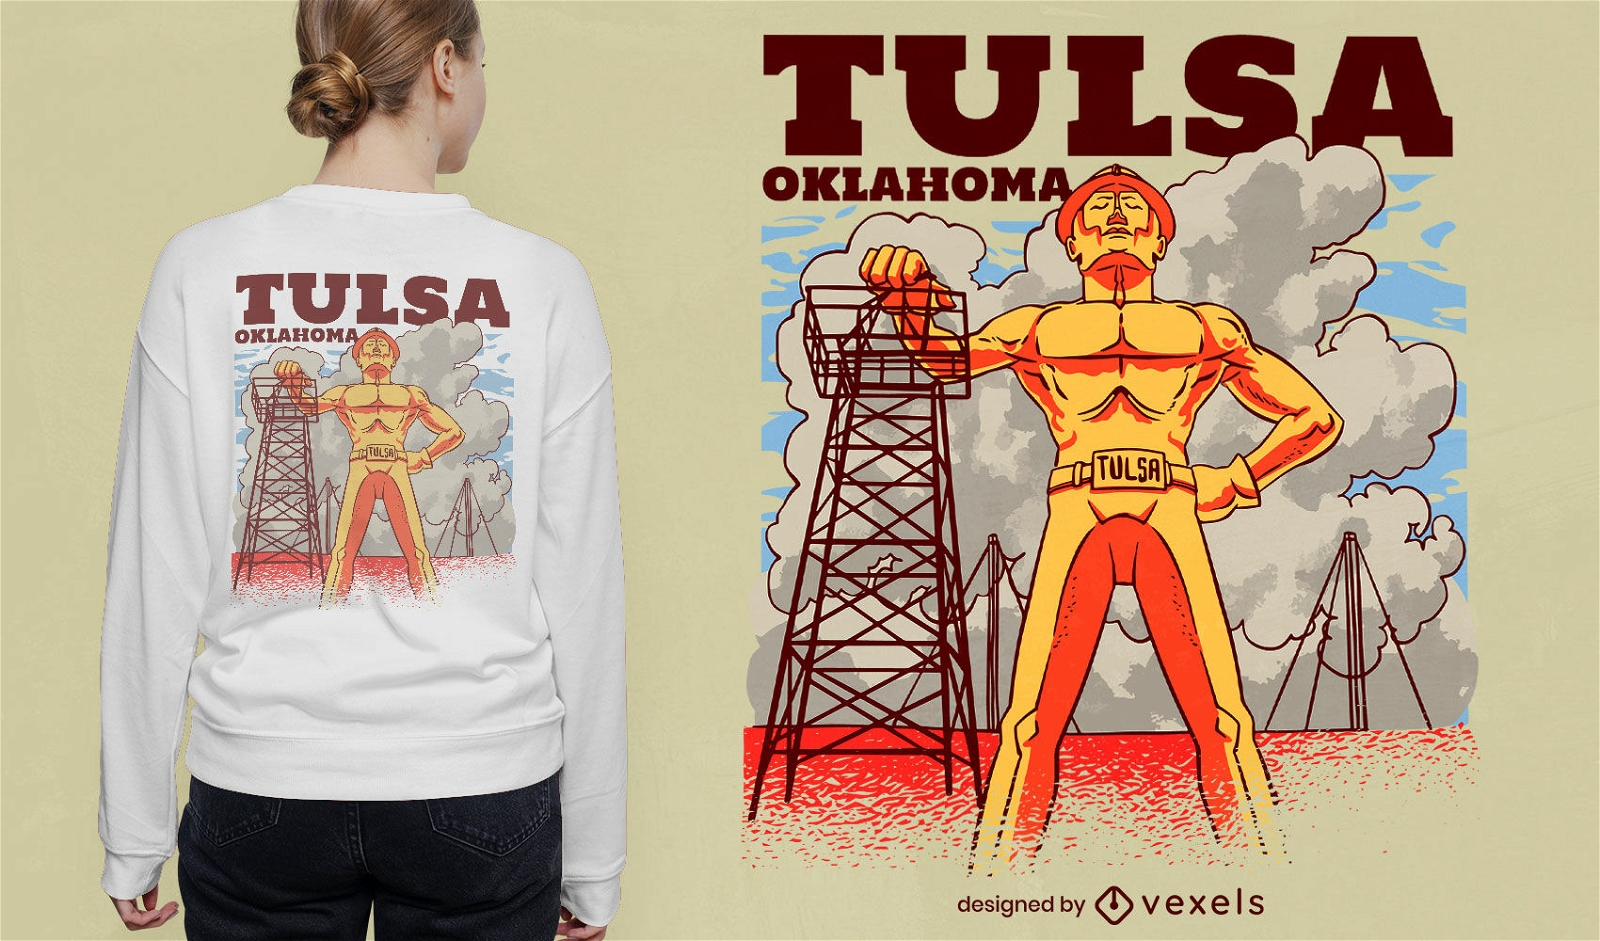 Tulsa Oklahoma T-shirt Design